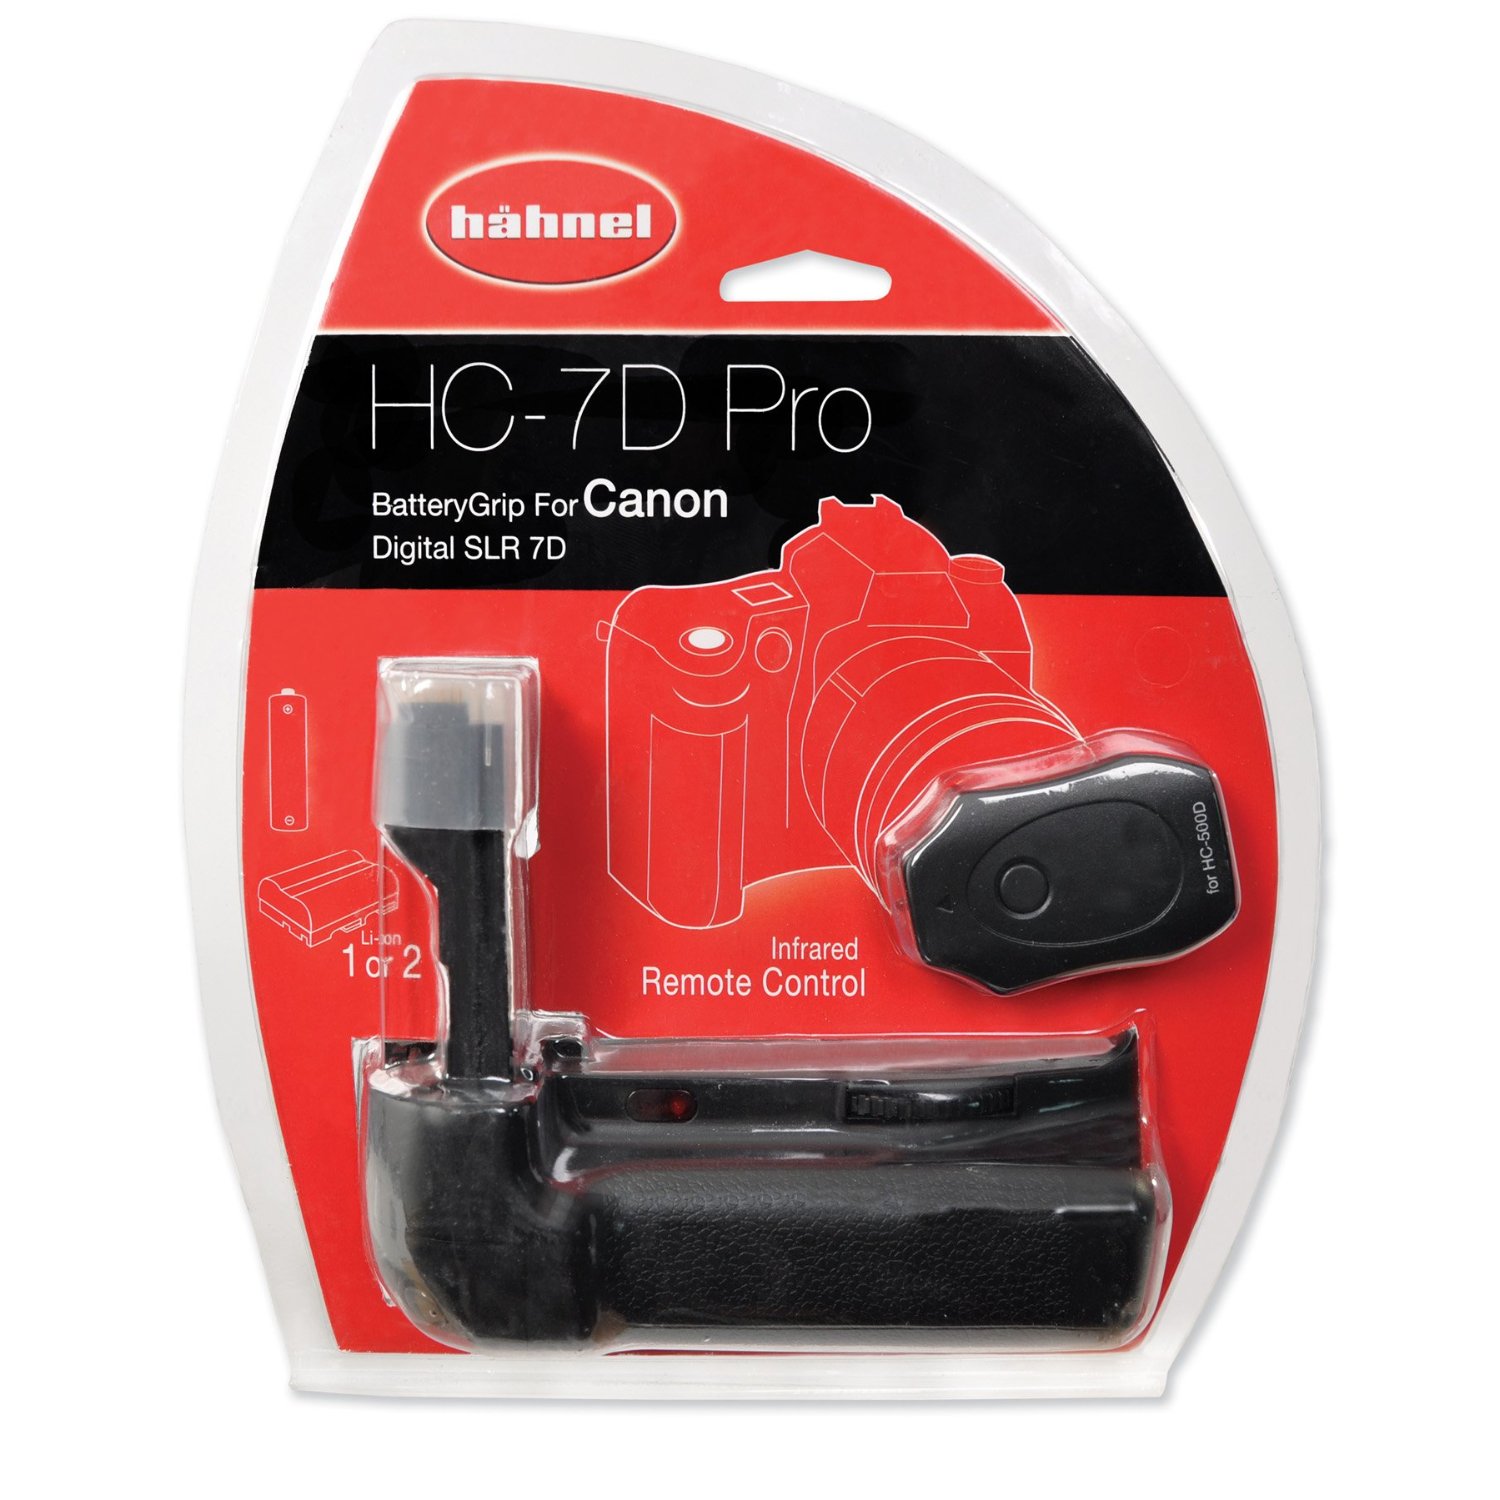 Hahnel HC-7D Pro SLR Battery Grip - for Canon 7D